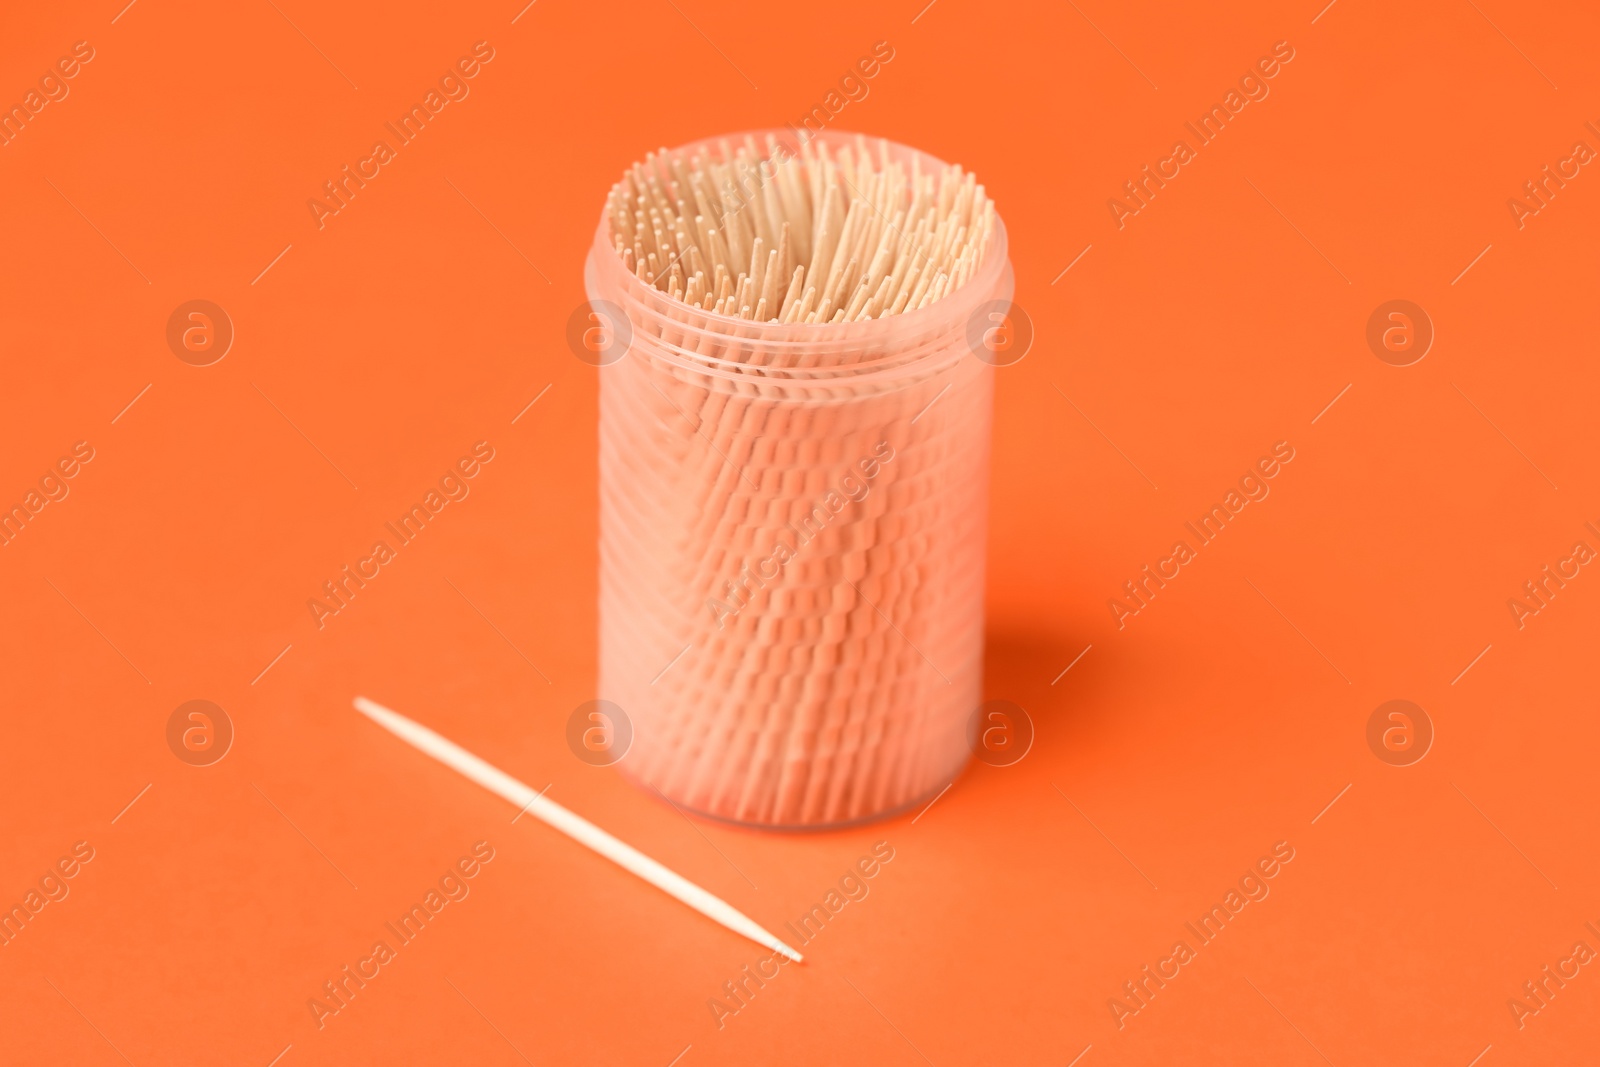 Photo of Wooden toothpicks and holder on orange background